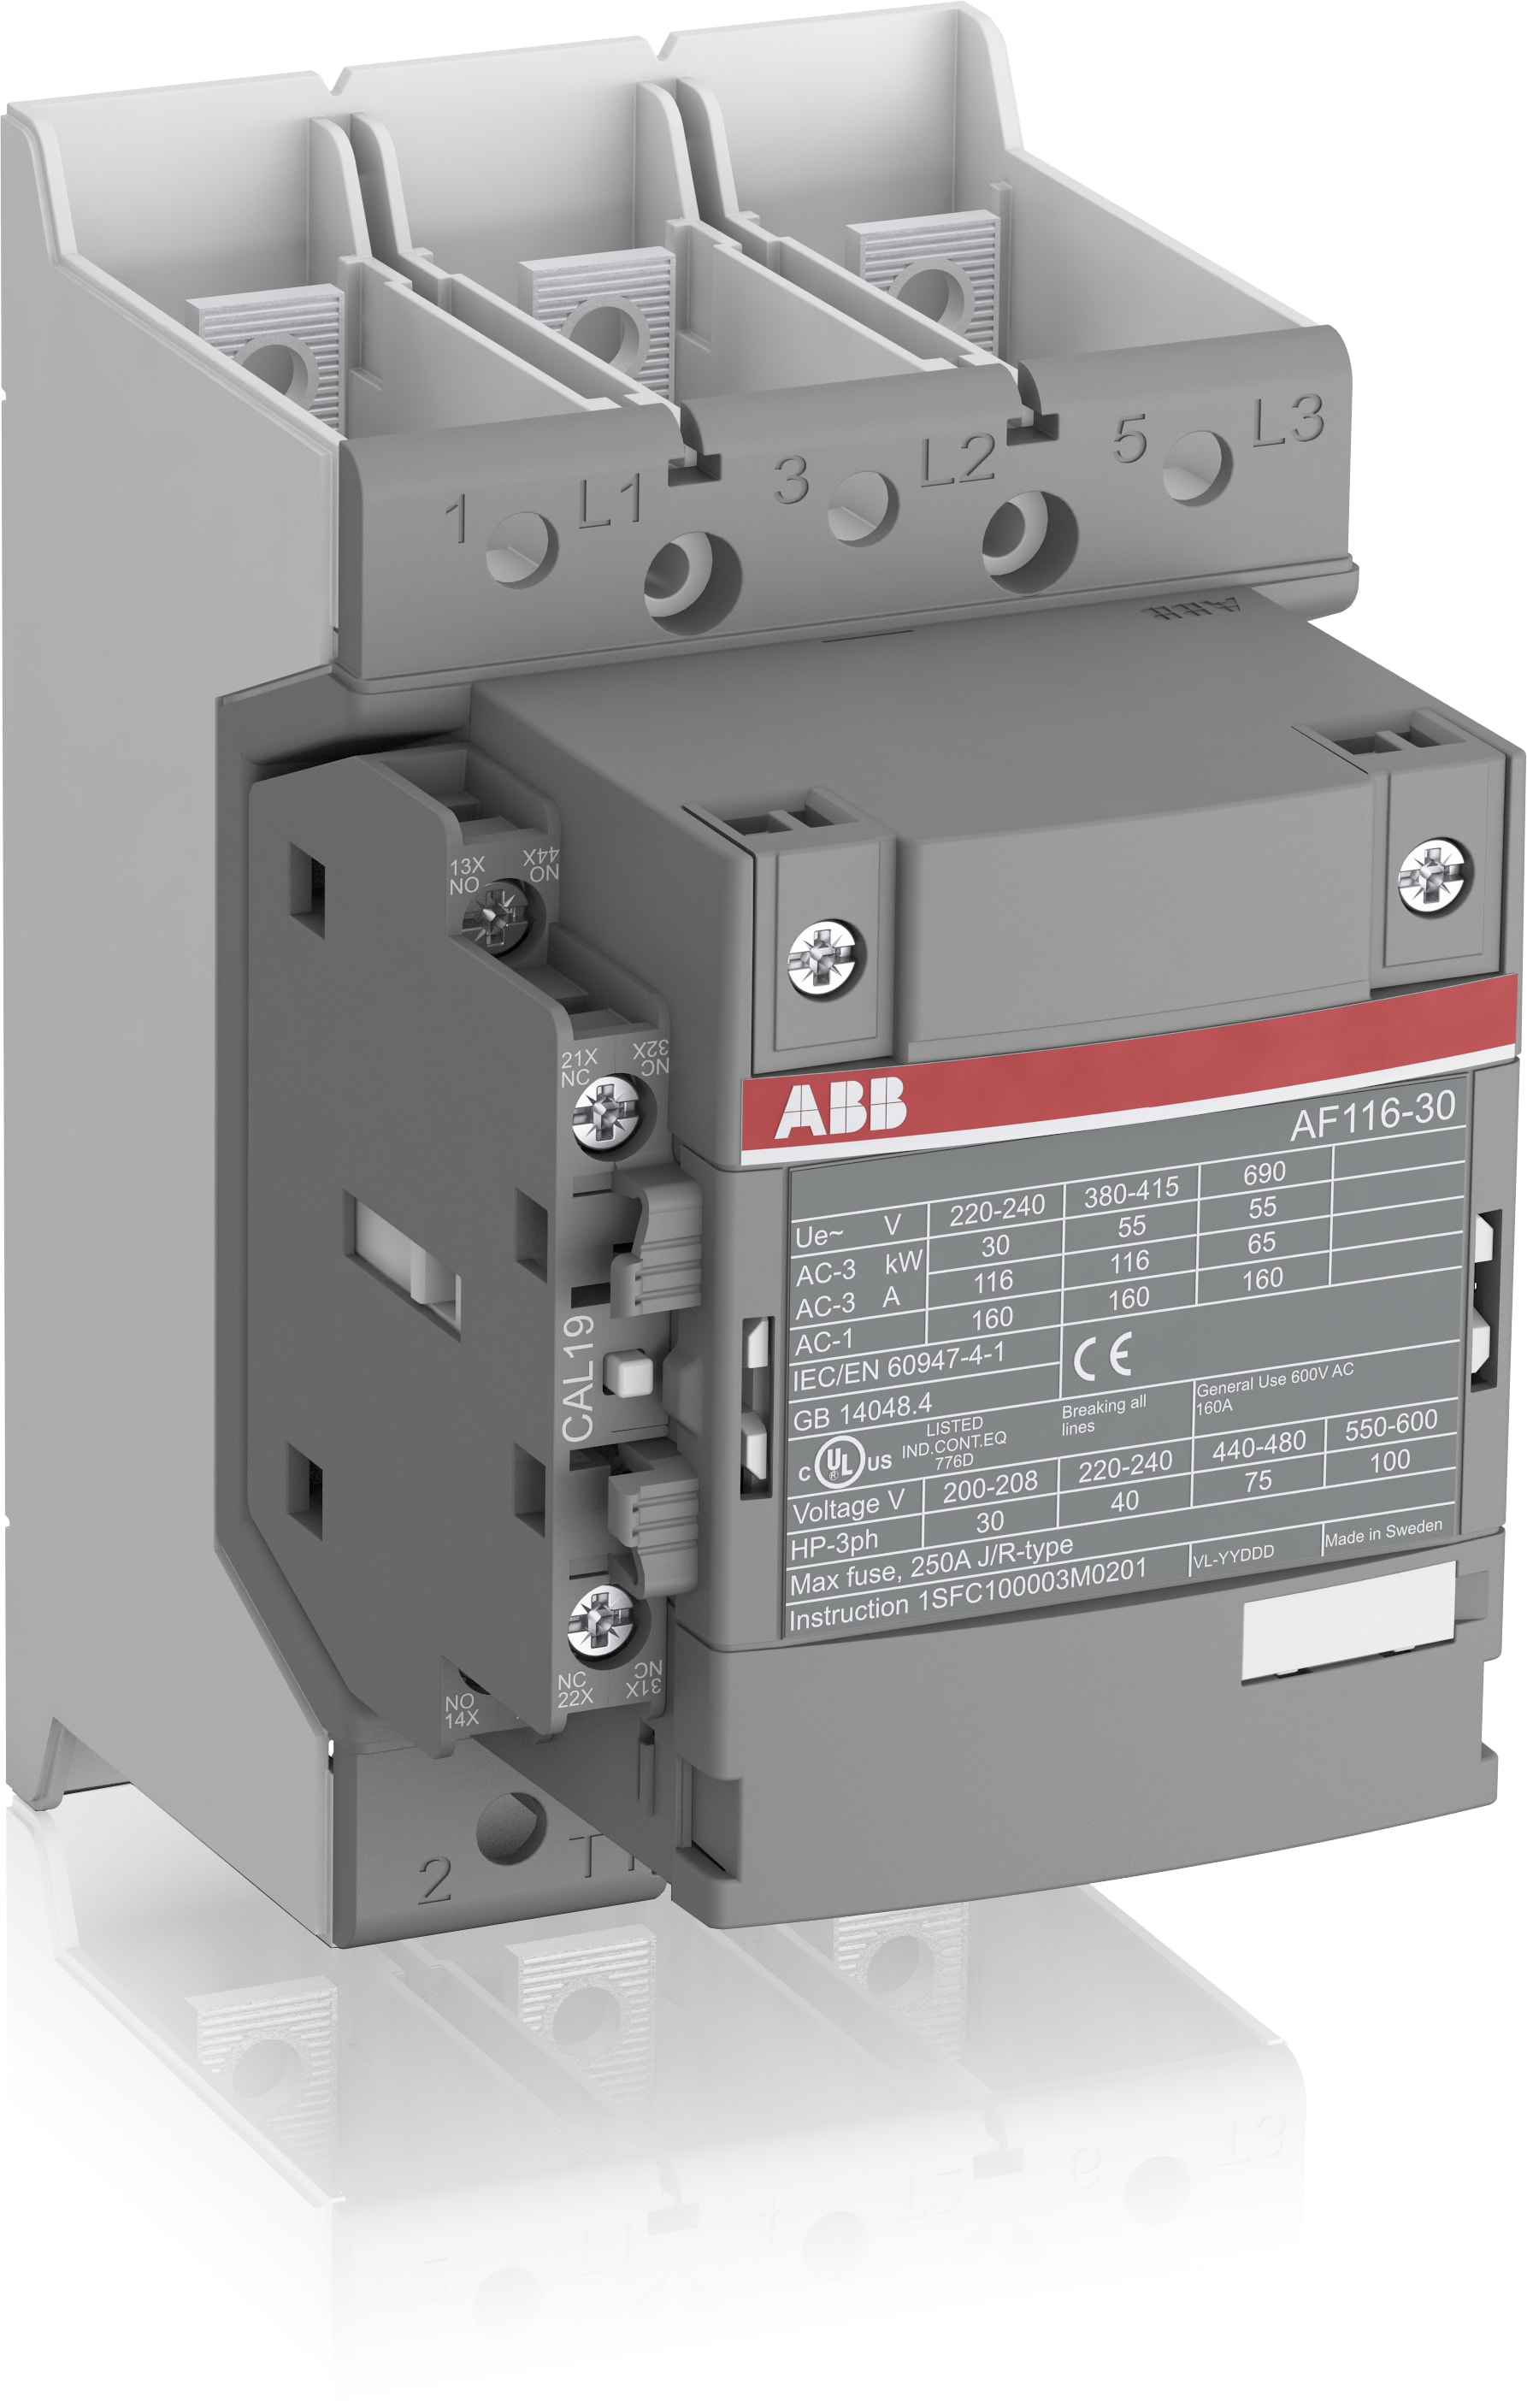 ABB Electrification - AF116-30-11-13B 100-250V 50/60Hz/DC - Kontaktor med skinnetilkobling. Med 1NO+1NC hjelpekontakt.